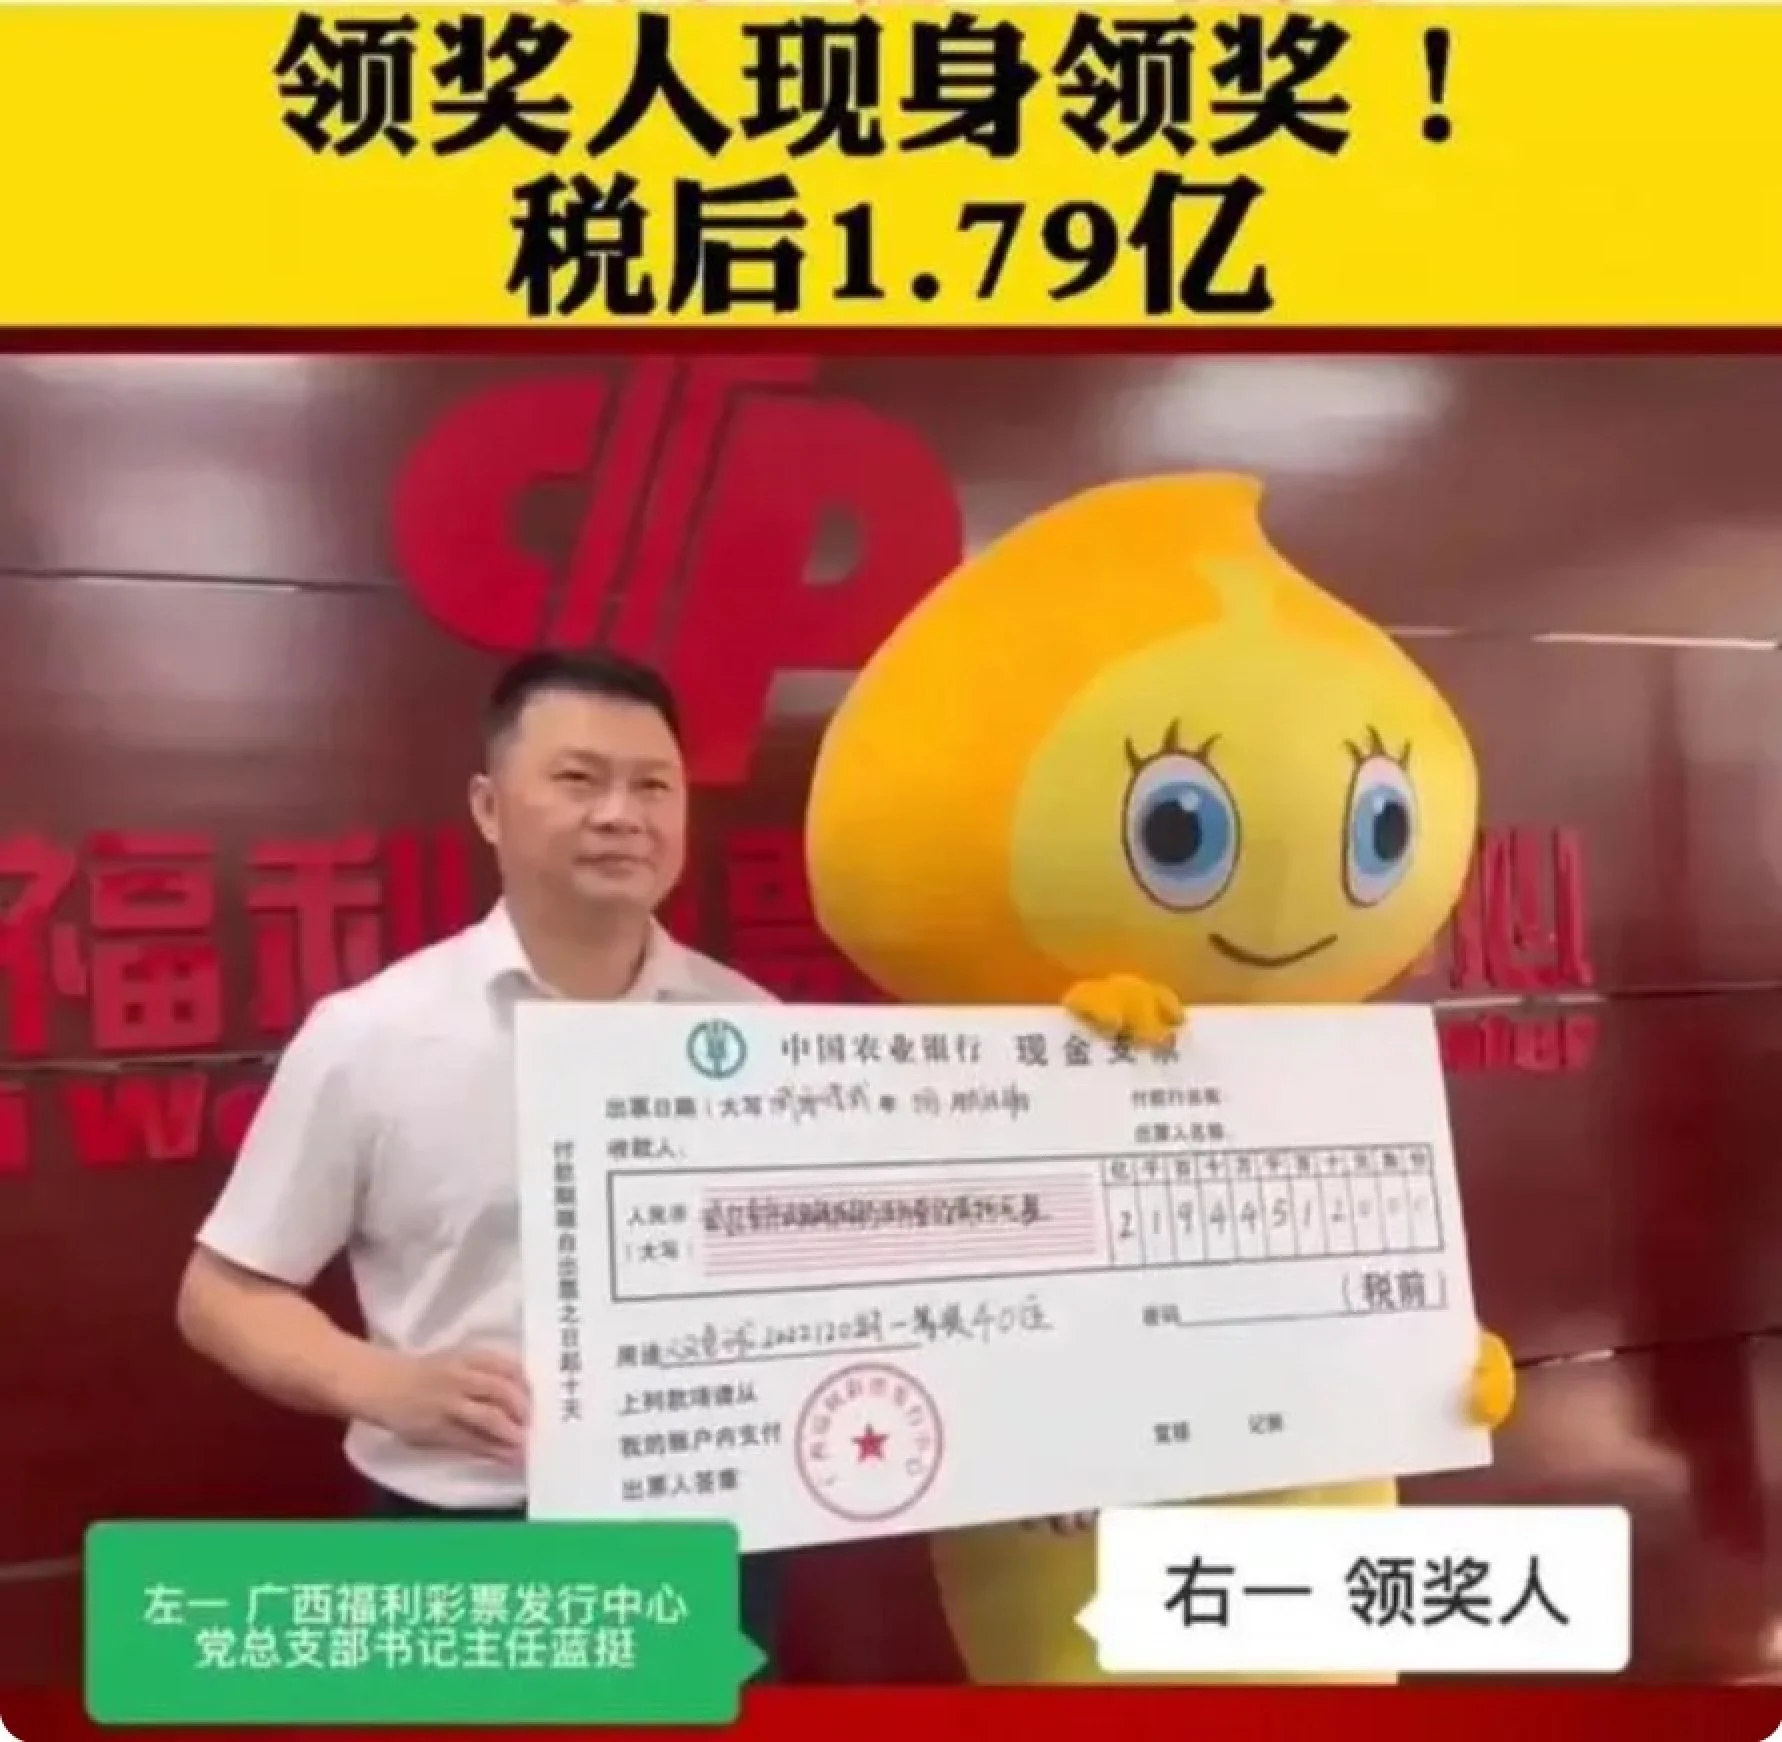 Li wins rm143 million lottery